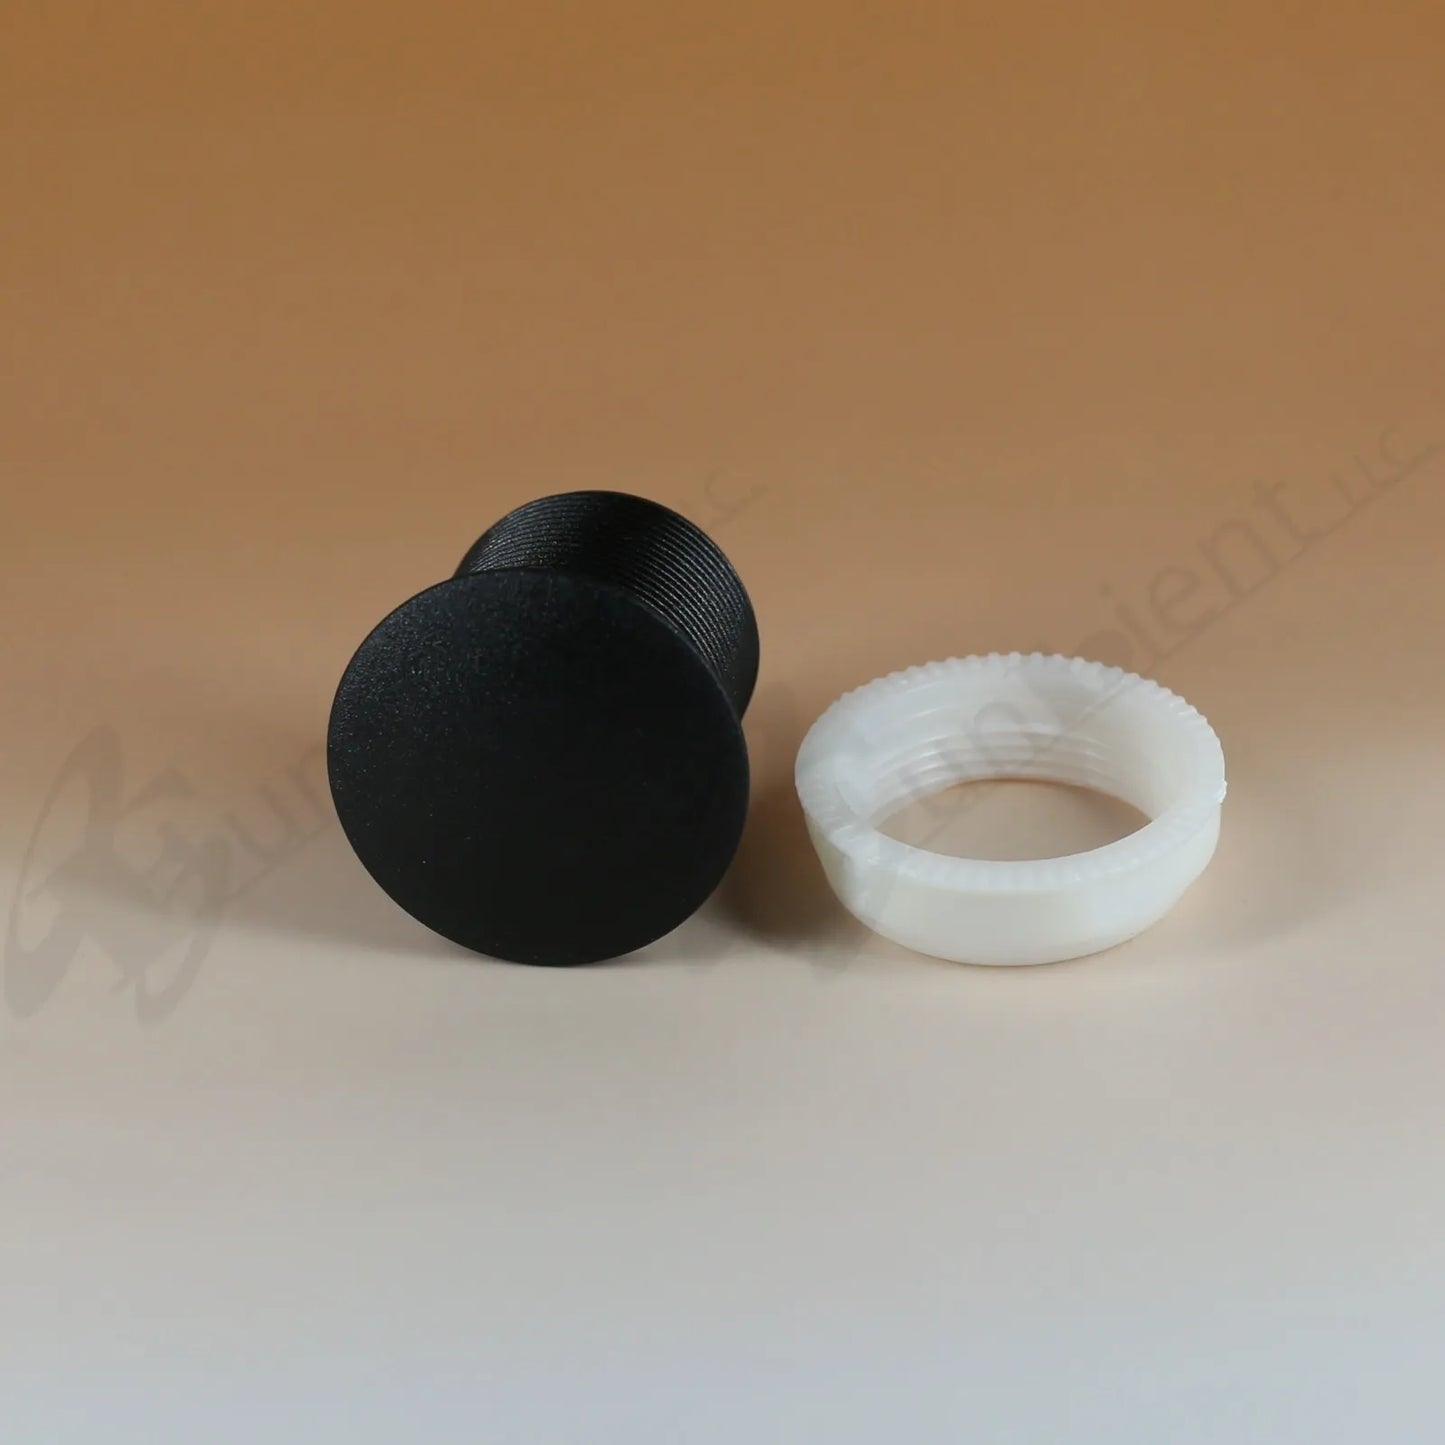 Sanwa Seimitsu Button Hole Cap Plug 30mm for Jamma Candy Cabinet OBSM screw type